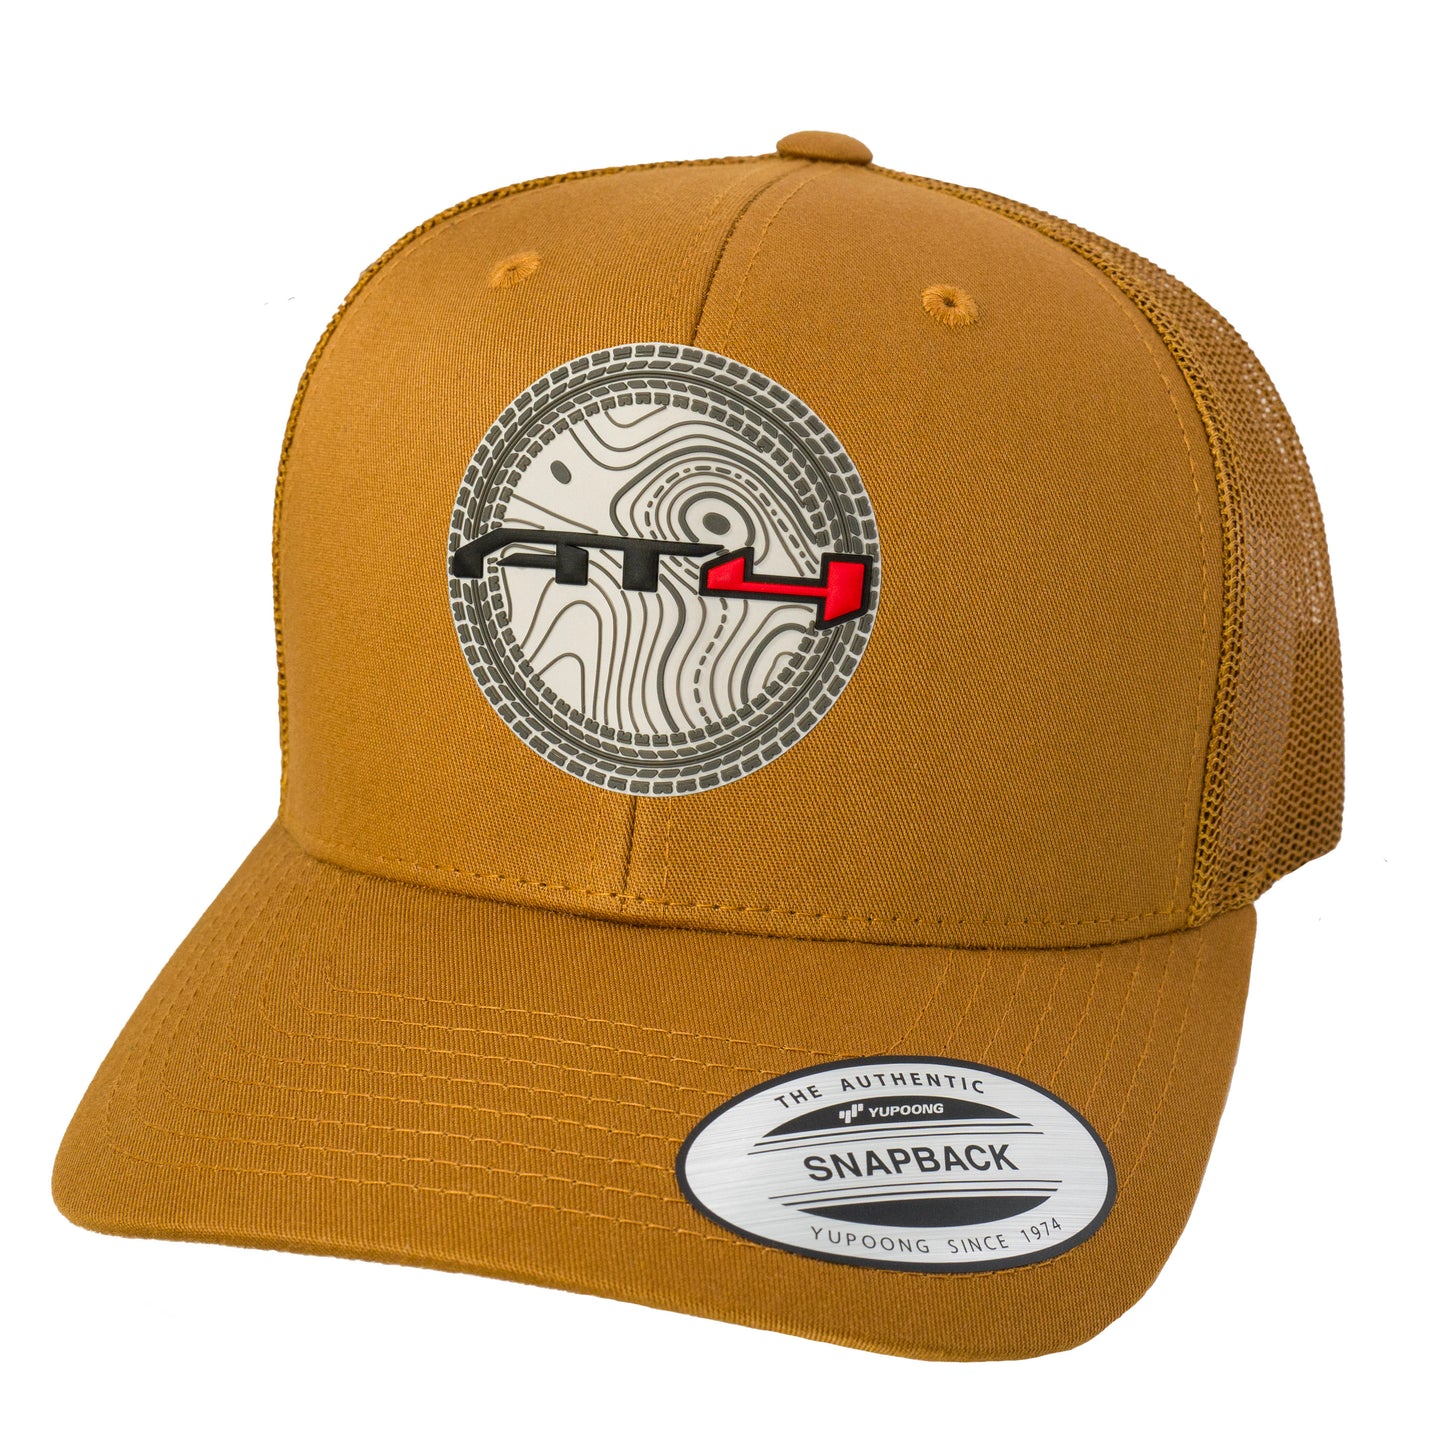 AT4 3D YP Snapback Trucker Hat- Caramel - Ten Gallon Hat Co.